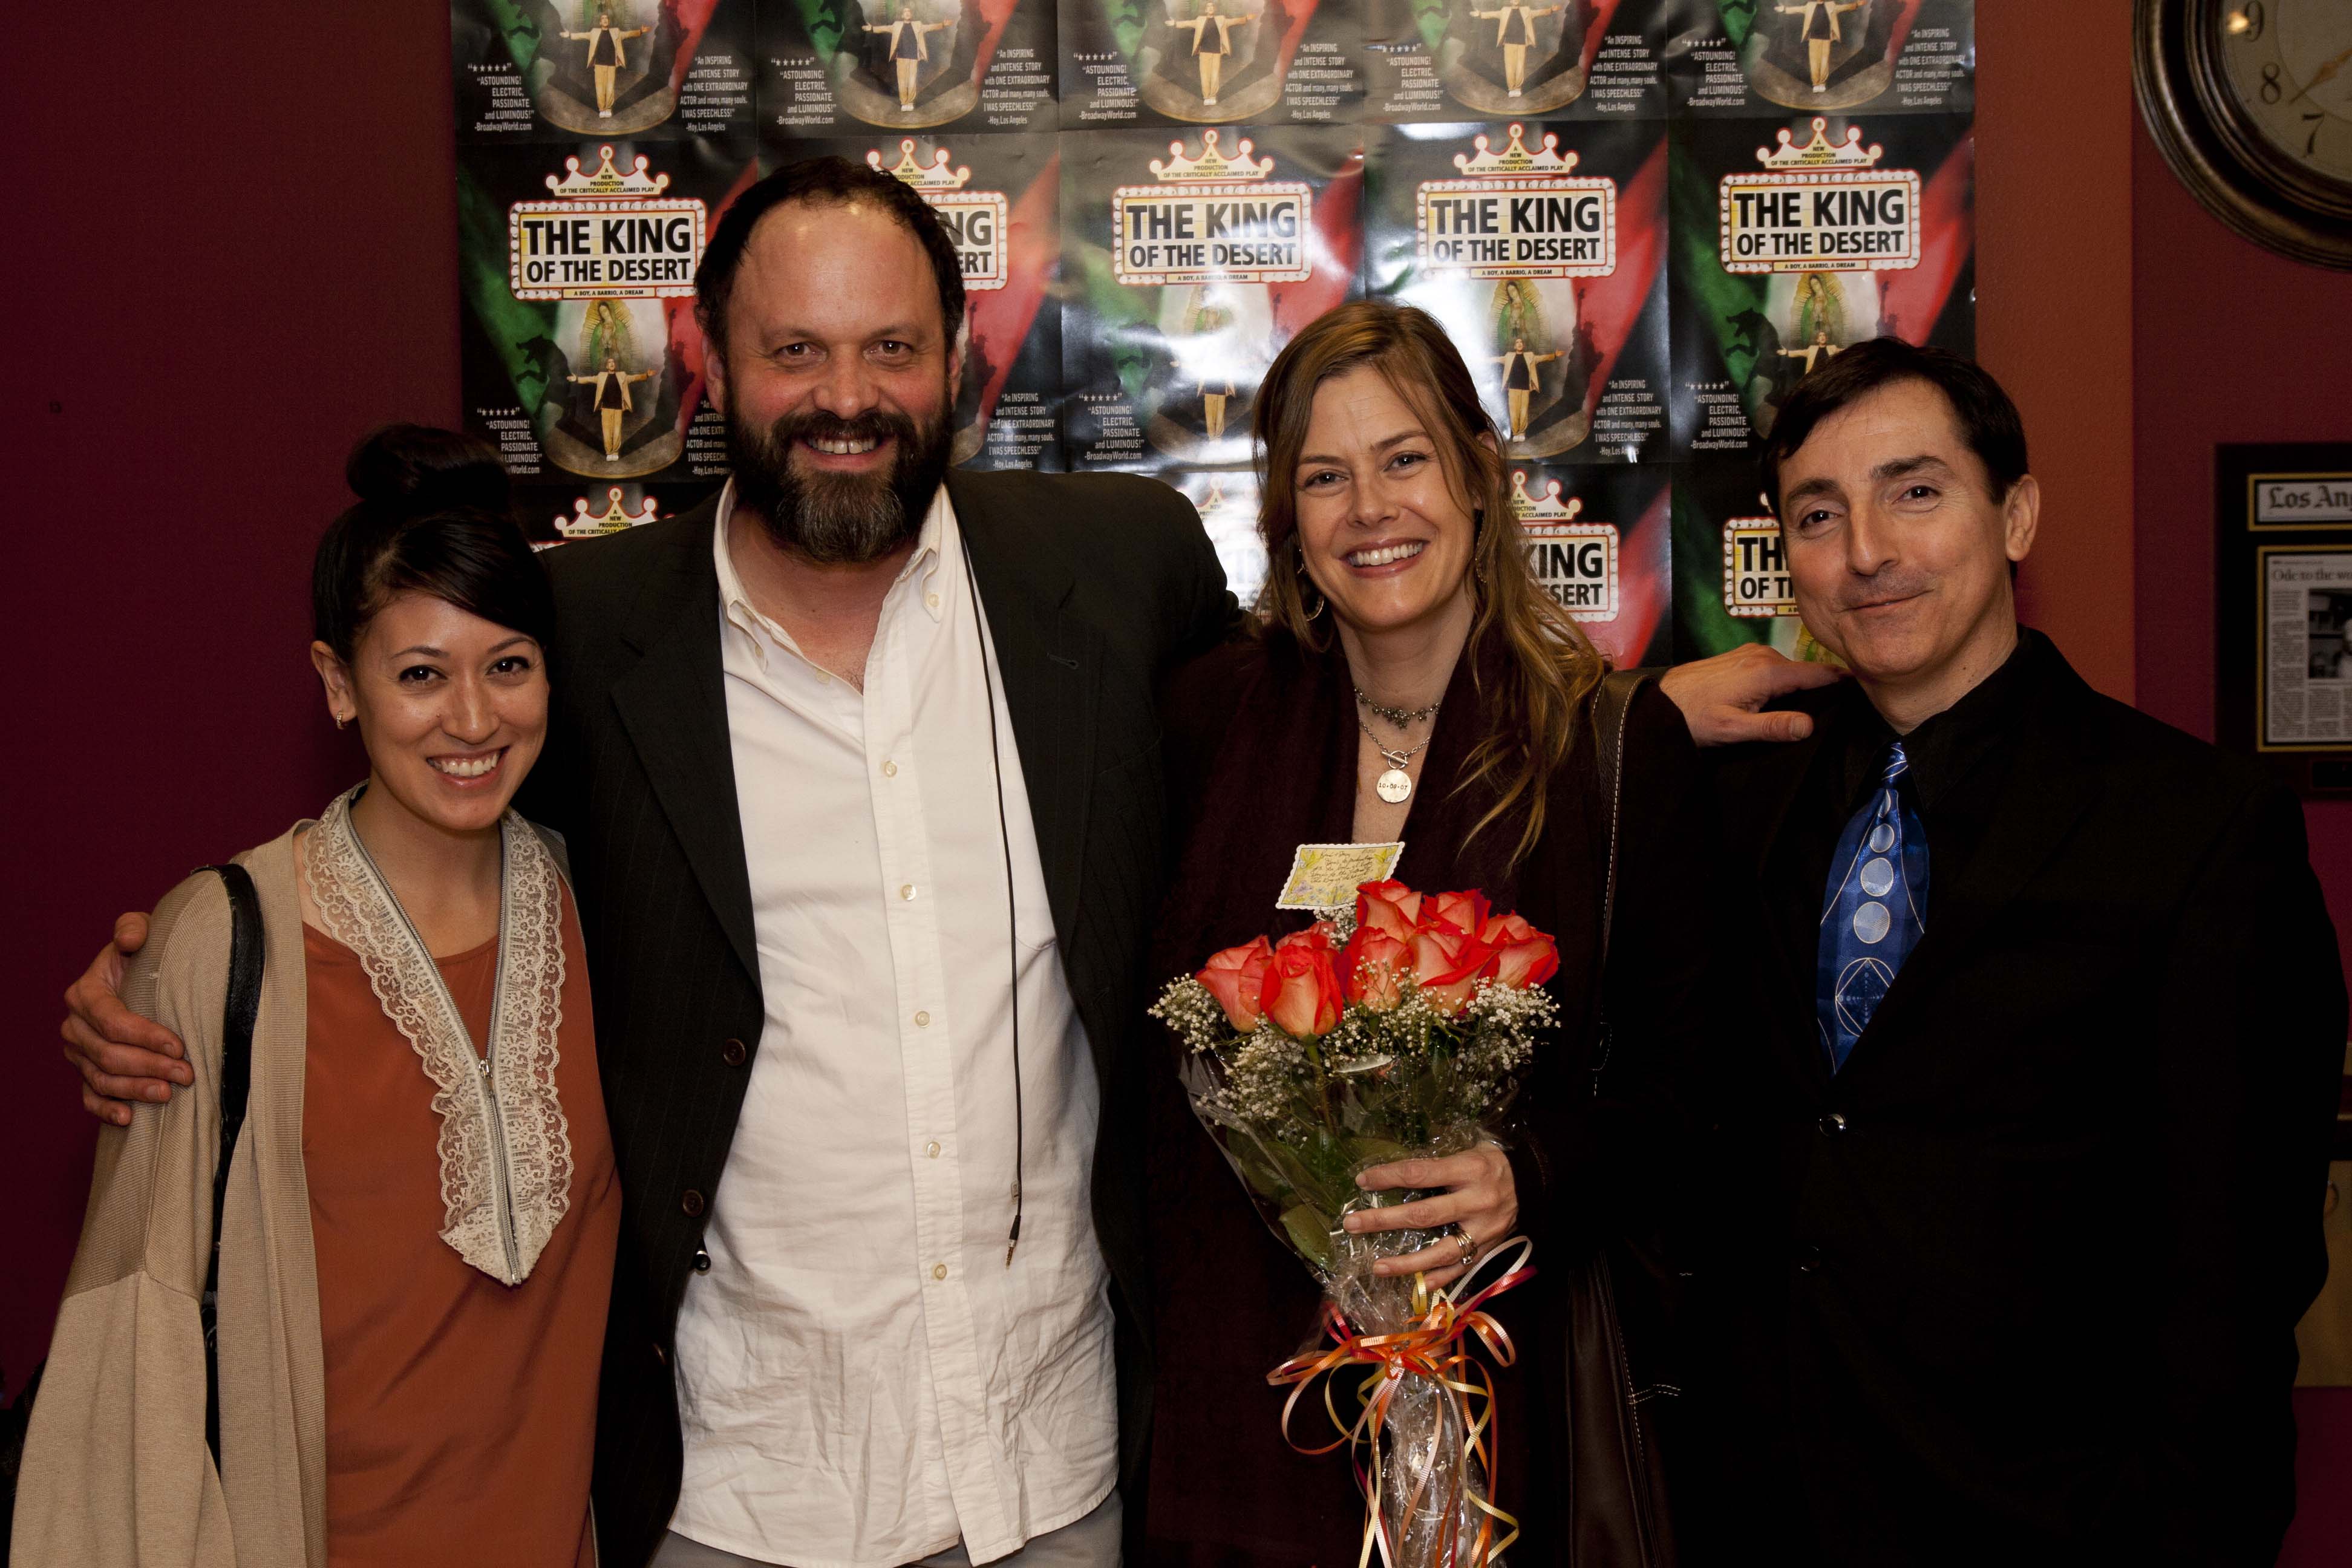 The King of the Desert Producers at Casa 0101: Heather Mendoza, David Llauger-Meiselman, Stacey Martino, Edward Padilla